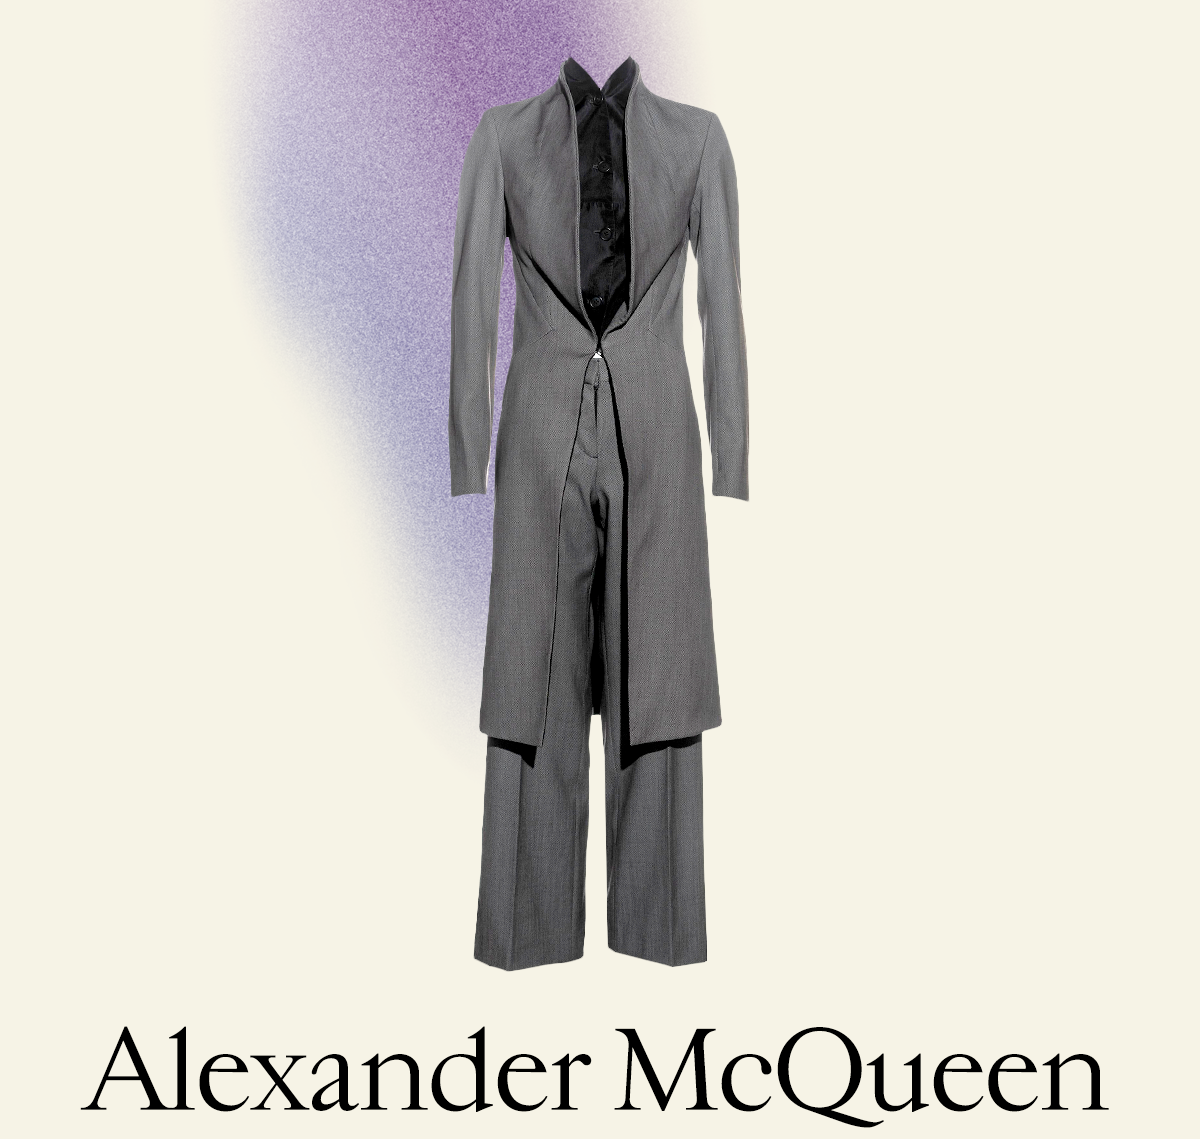 Alexander McQueen Structured Pants Suit, Fall/Winter 2000